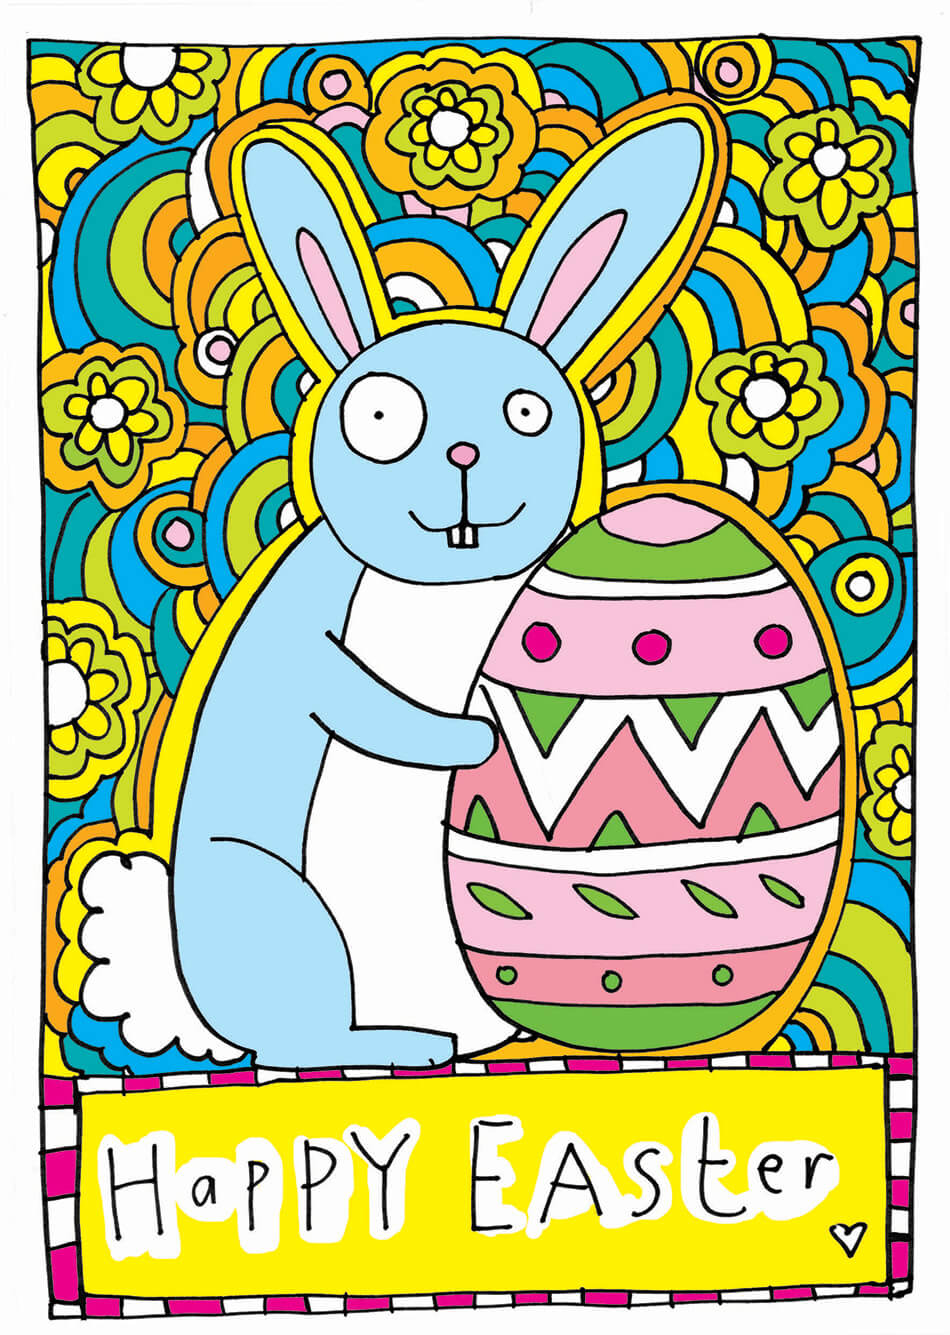 Liz's Easter Bunny 